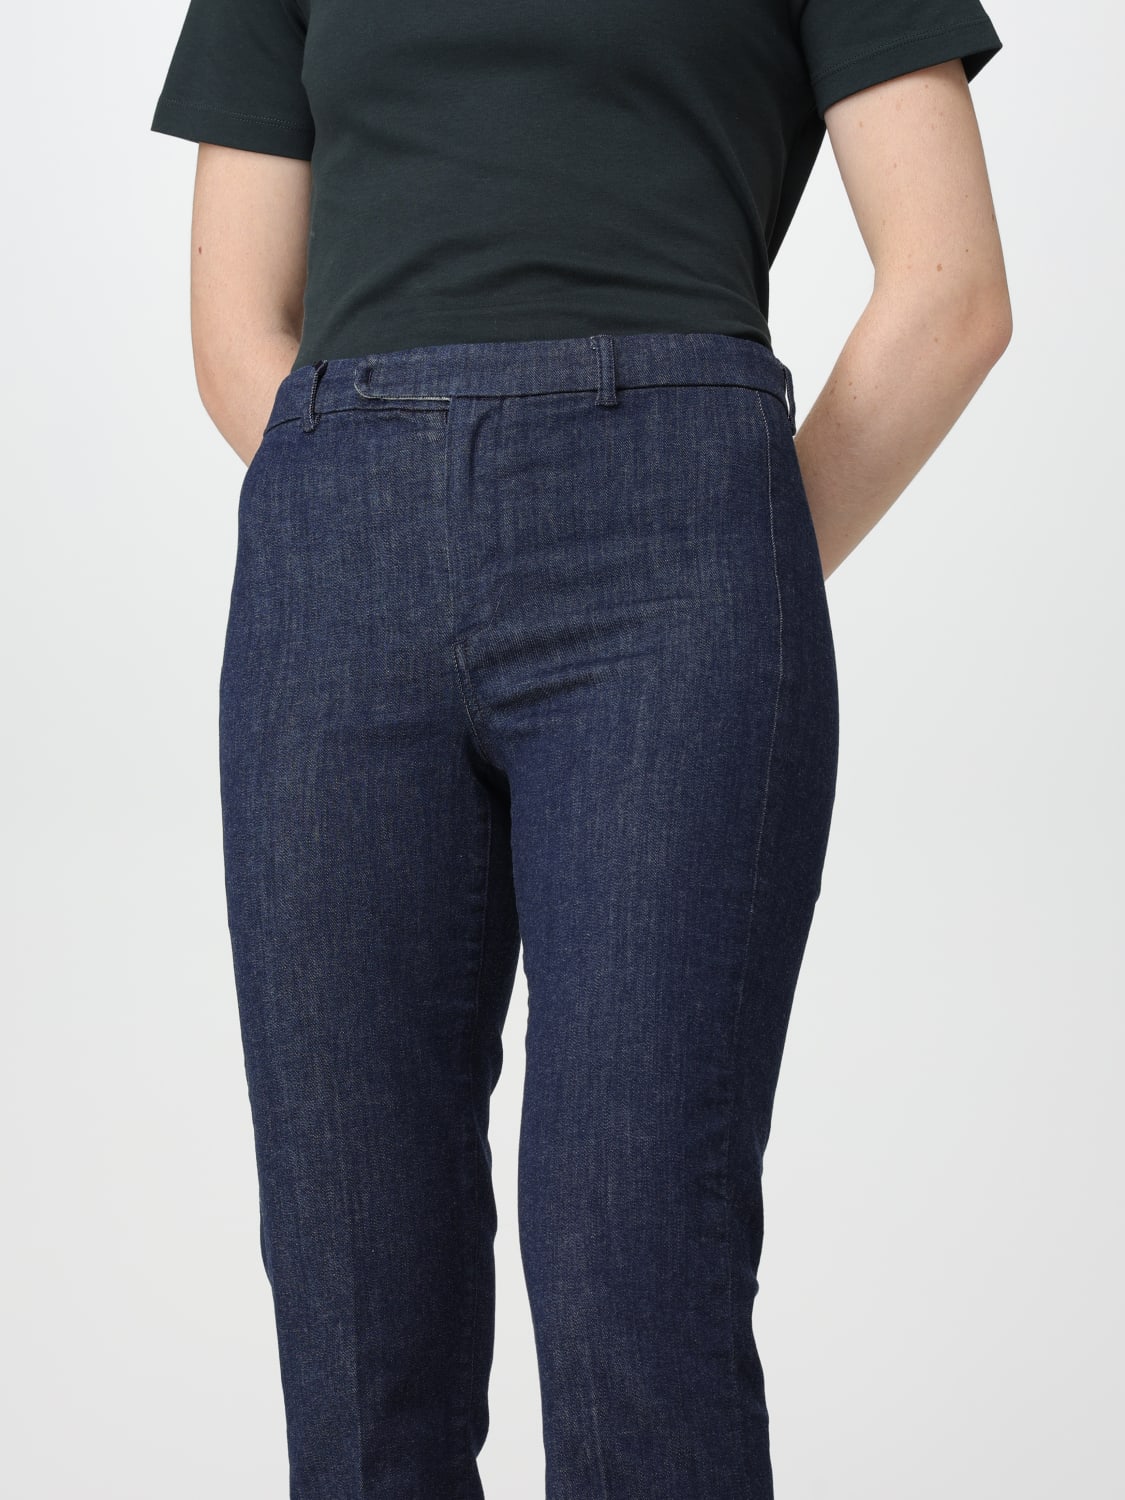 S MAX MARA: S Max Mara denim jeans - Navy | 'S Max Mara jeans